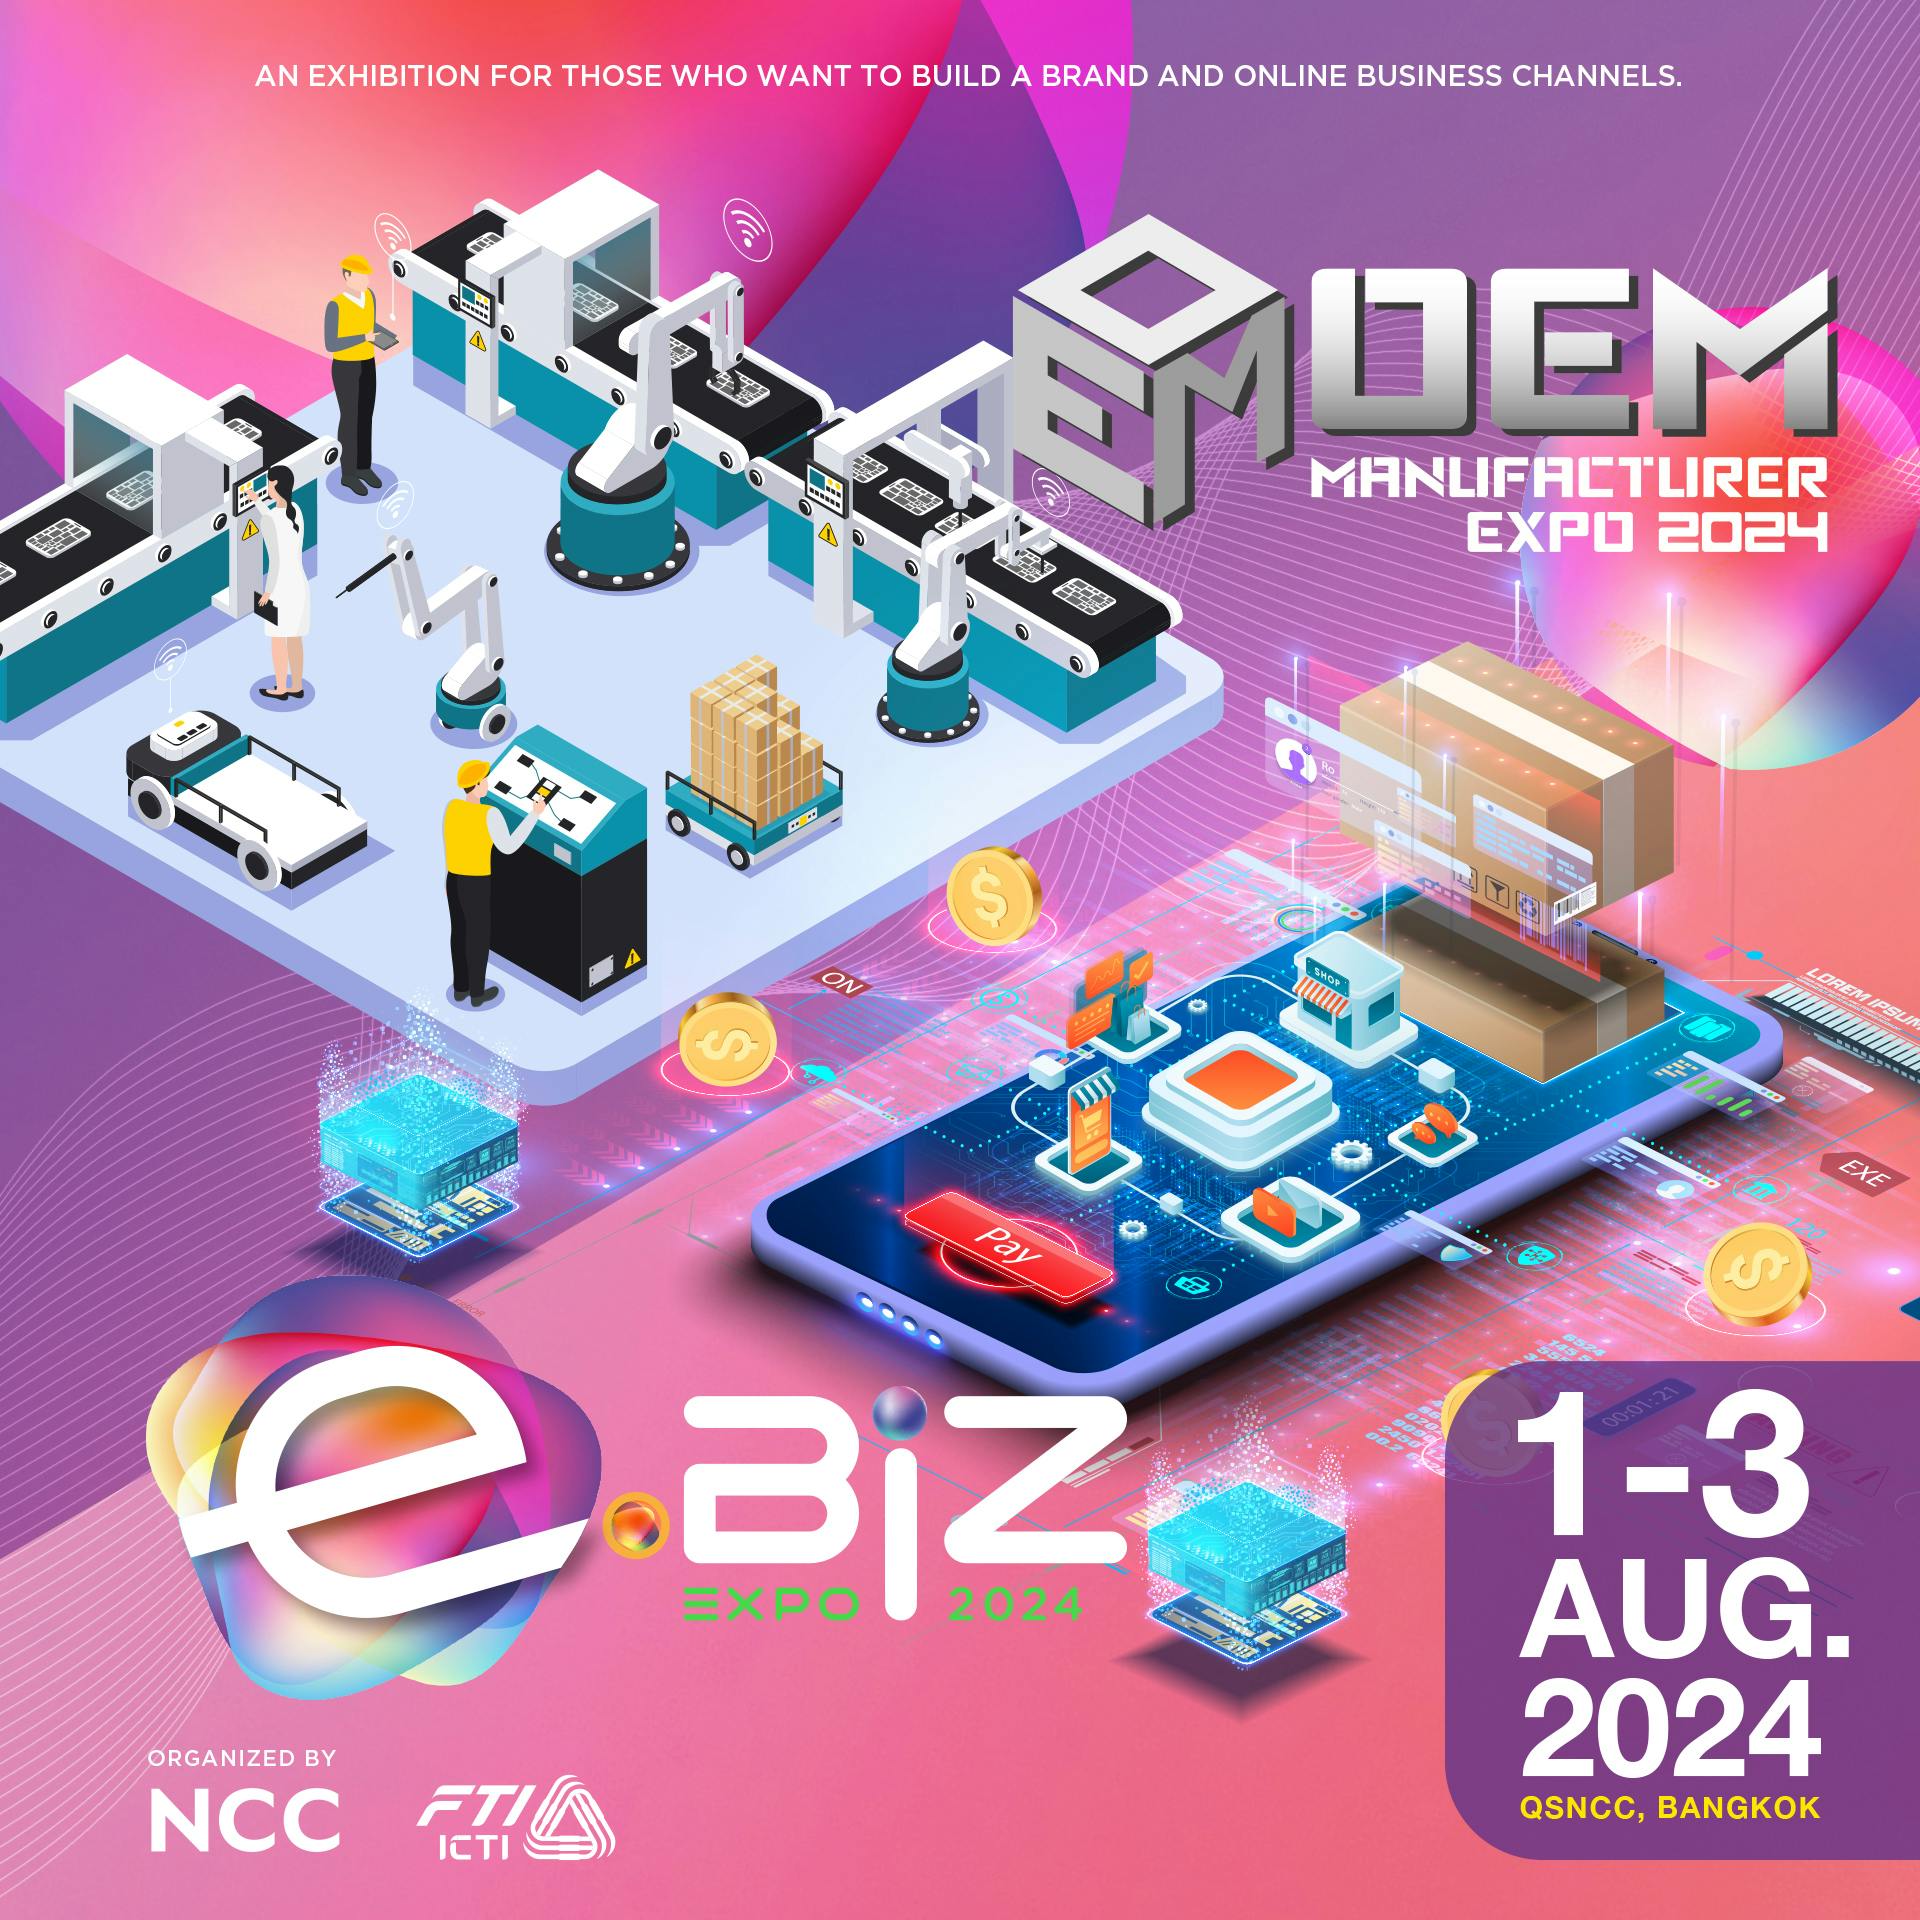 OEM Manufacturer & e-Biz Expo 2024